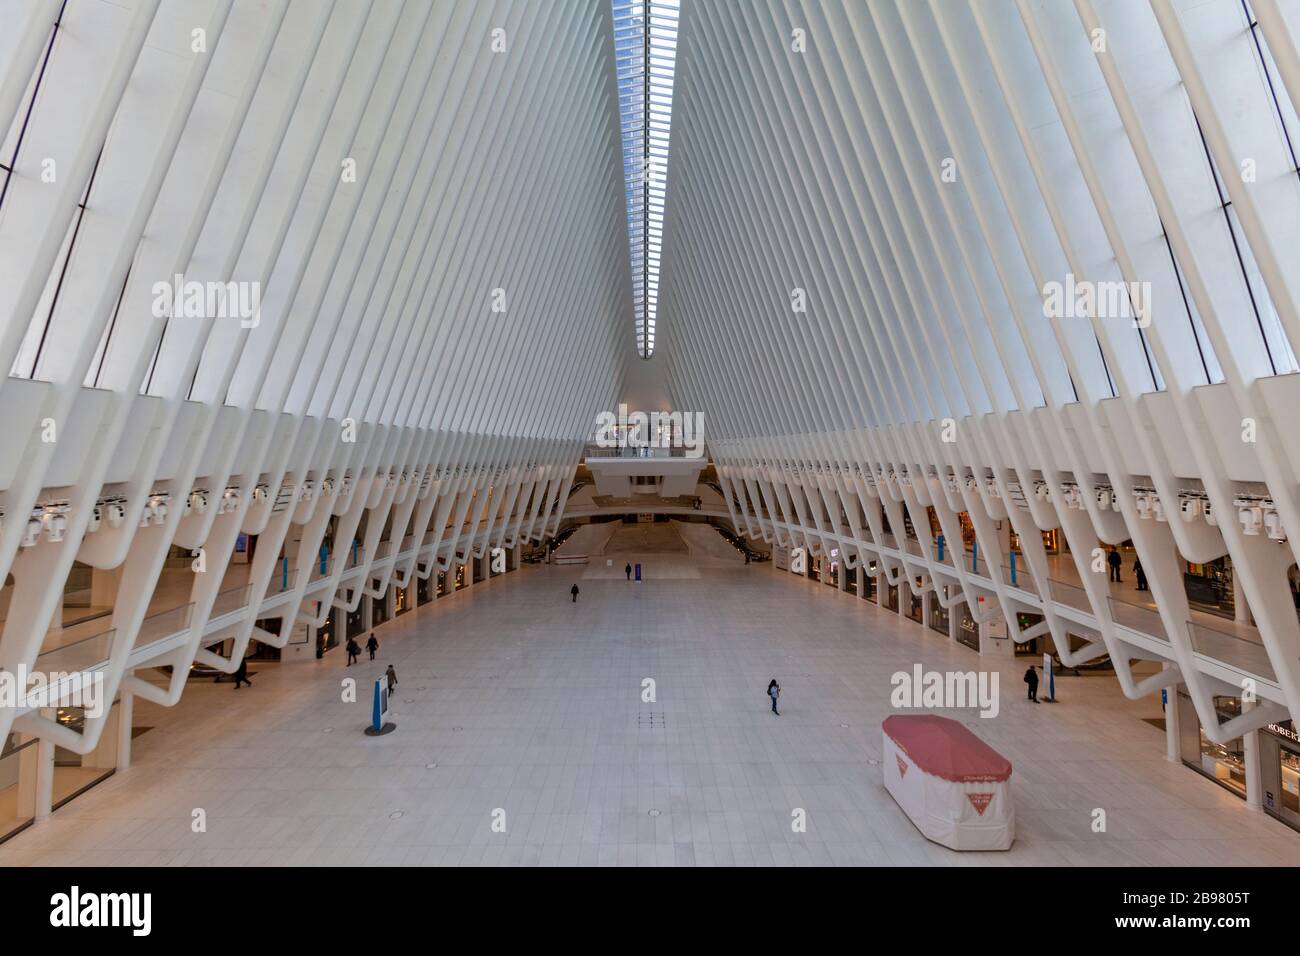 Nur sehr wenige Passagiere im World Trade Center Oculus in New York City wegen COVID-19, Coronavirus. Stockfoto